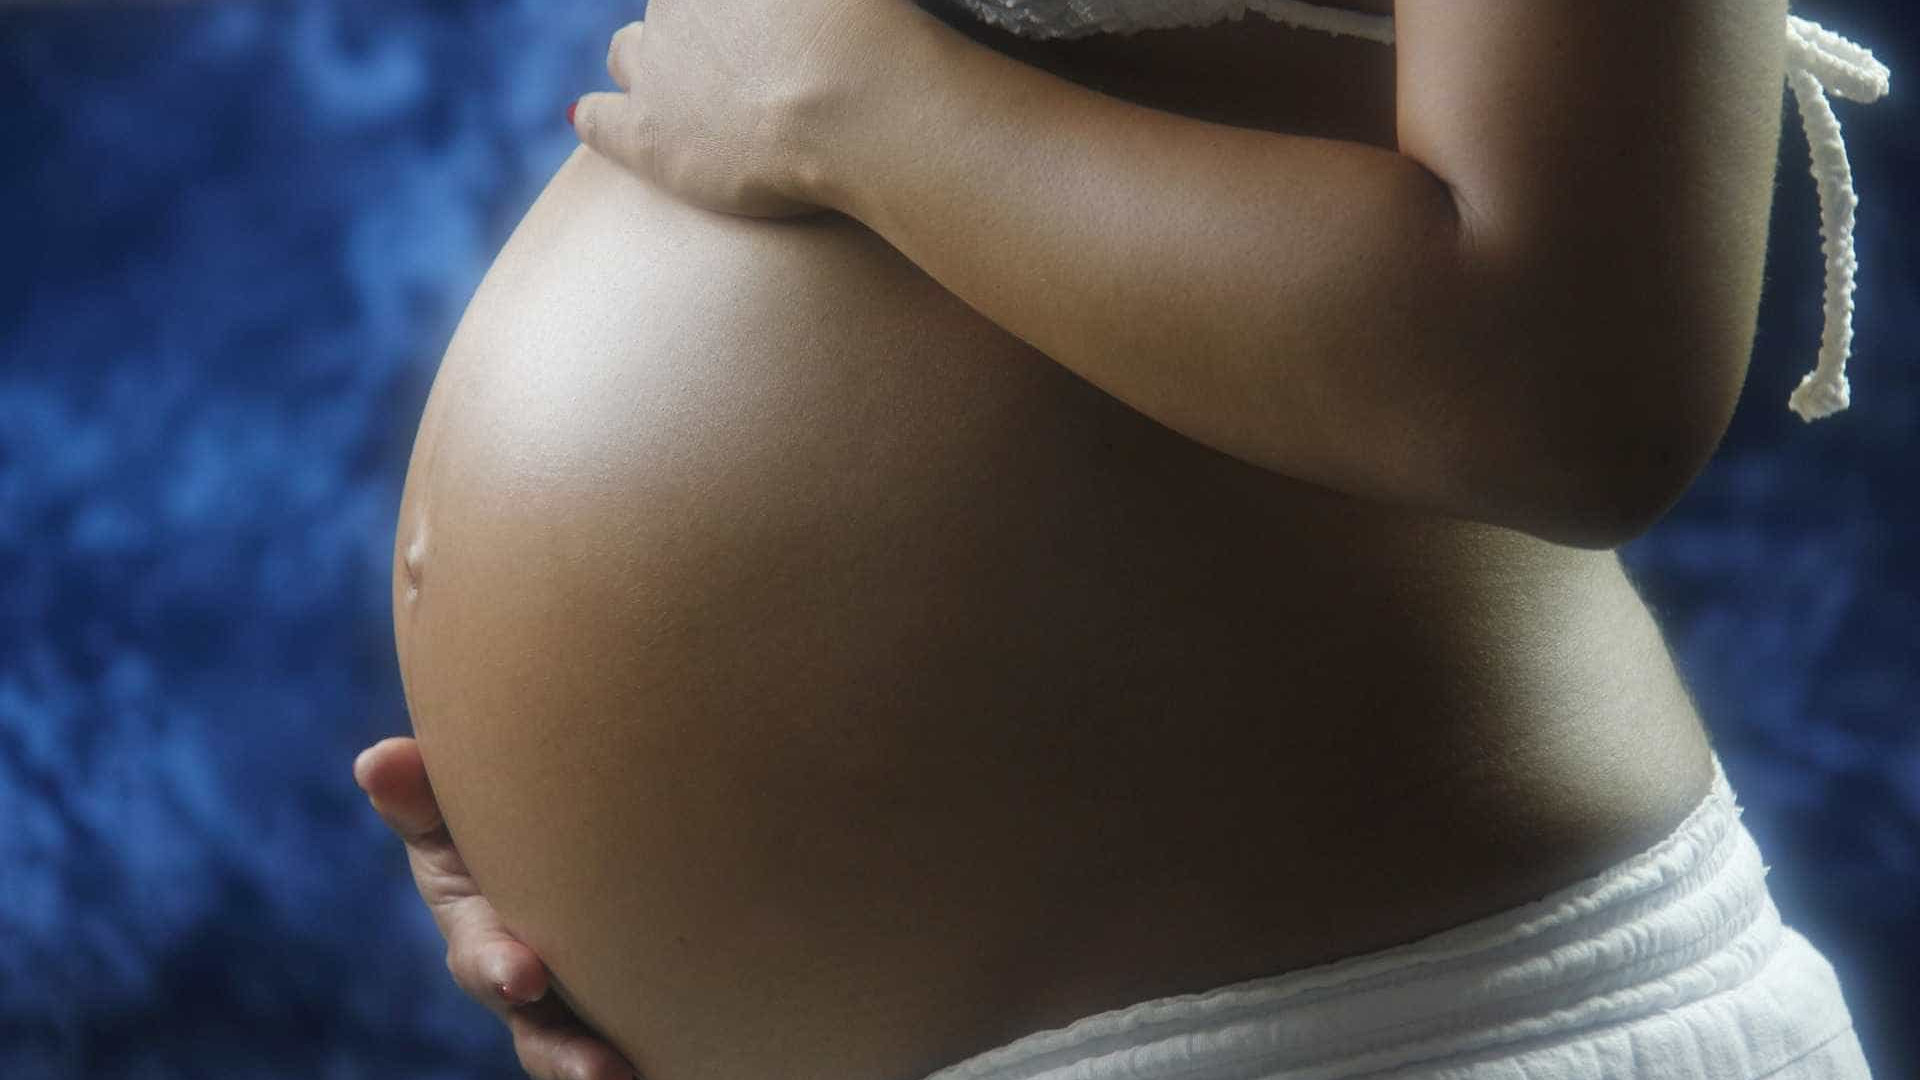 De risco, gravidez até 14 anos persiste no Brasil